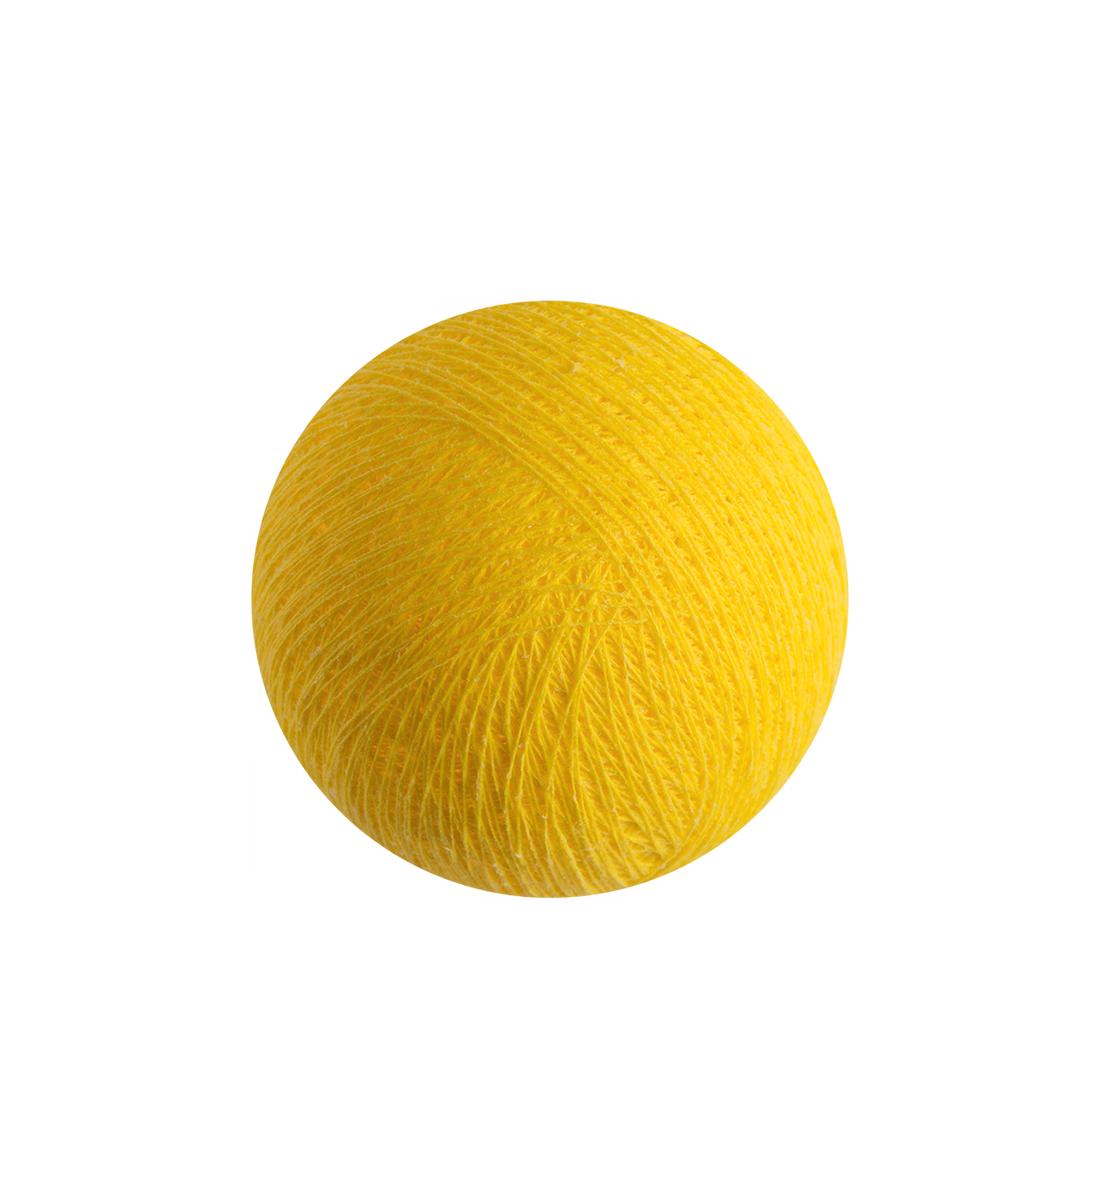 yellow - Outdoor balls - La Case de Cousin Paul